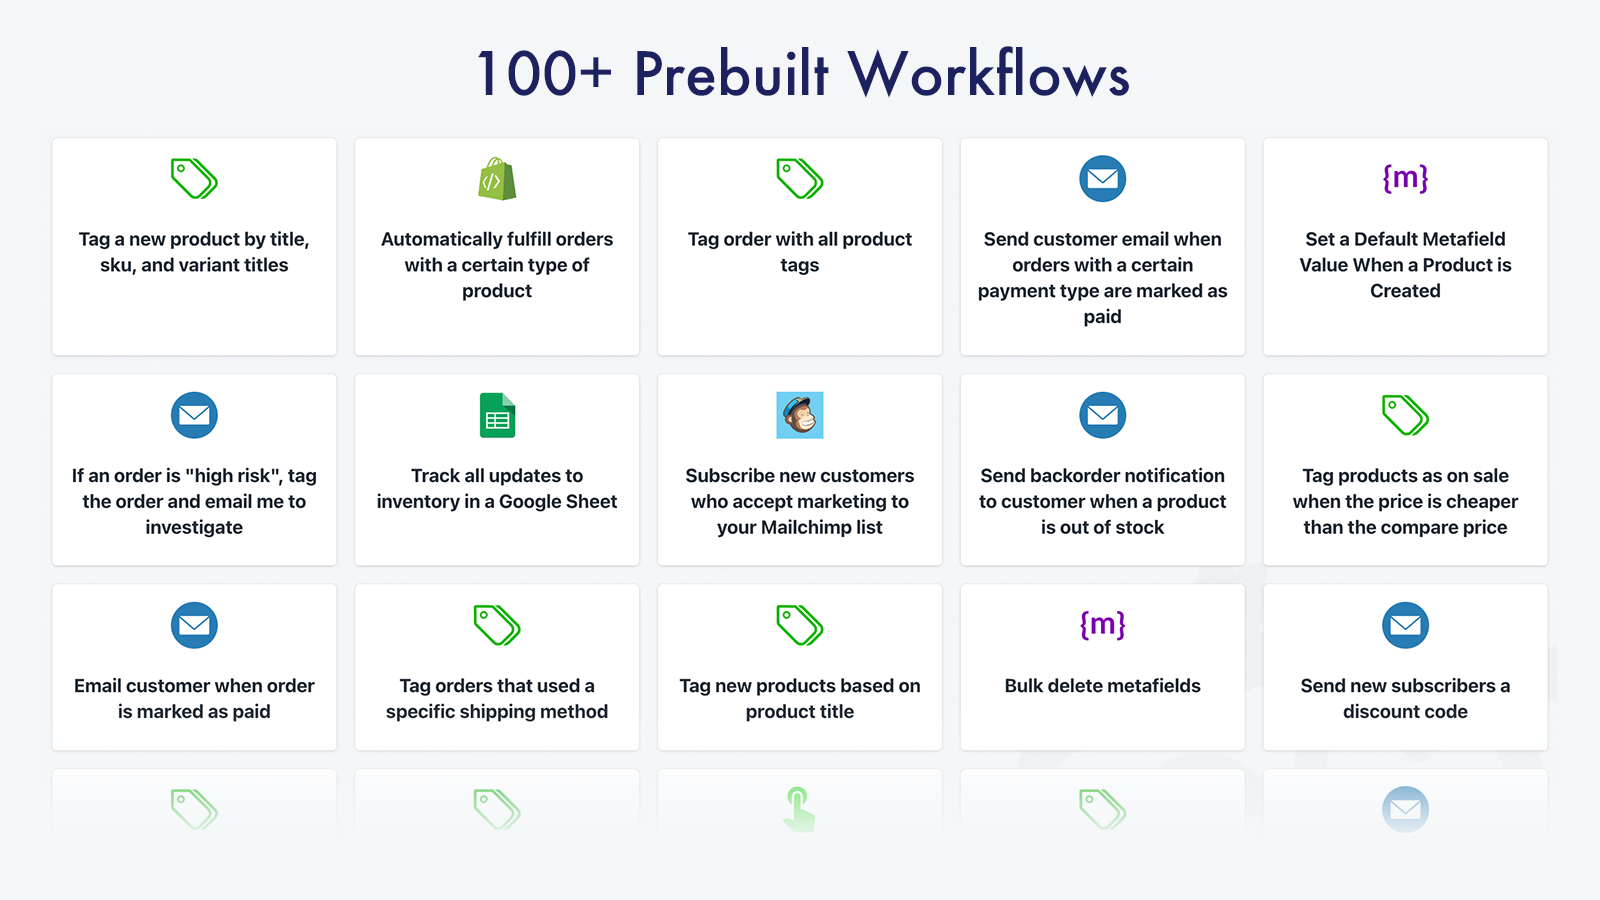 Over 100 prebuilt workflows